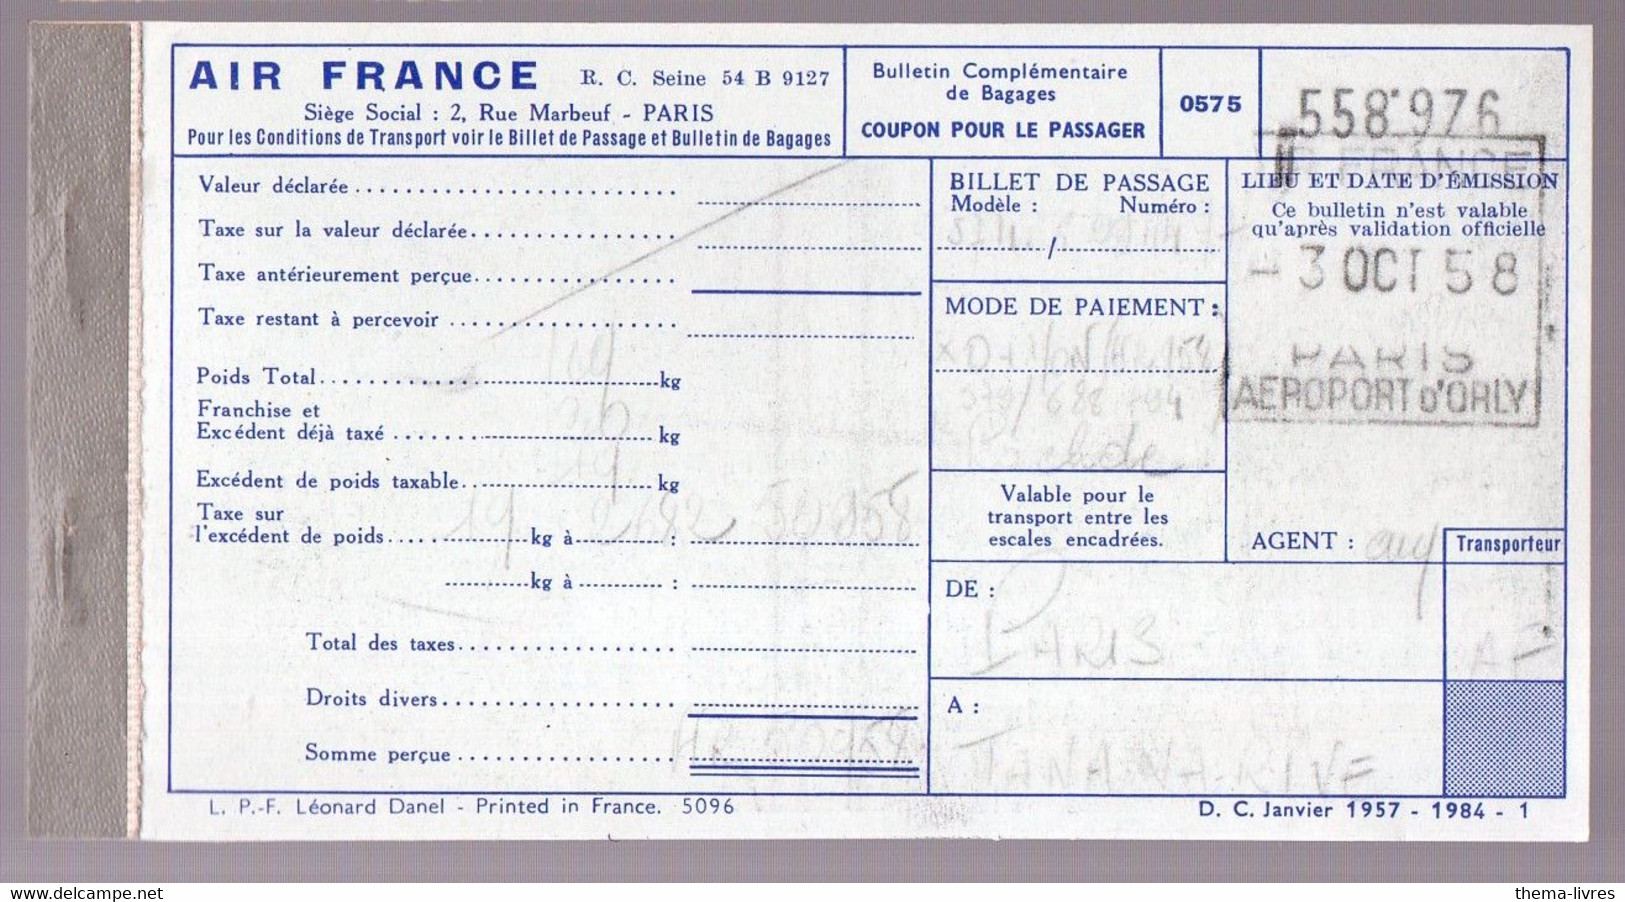 Billet AIR FRANCE  1958 PARIS TANANARIVE   (PPP27807) - Wereld